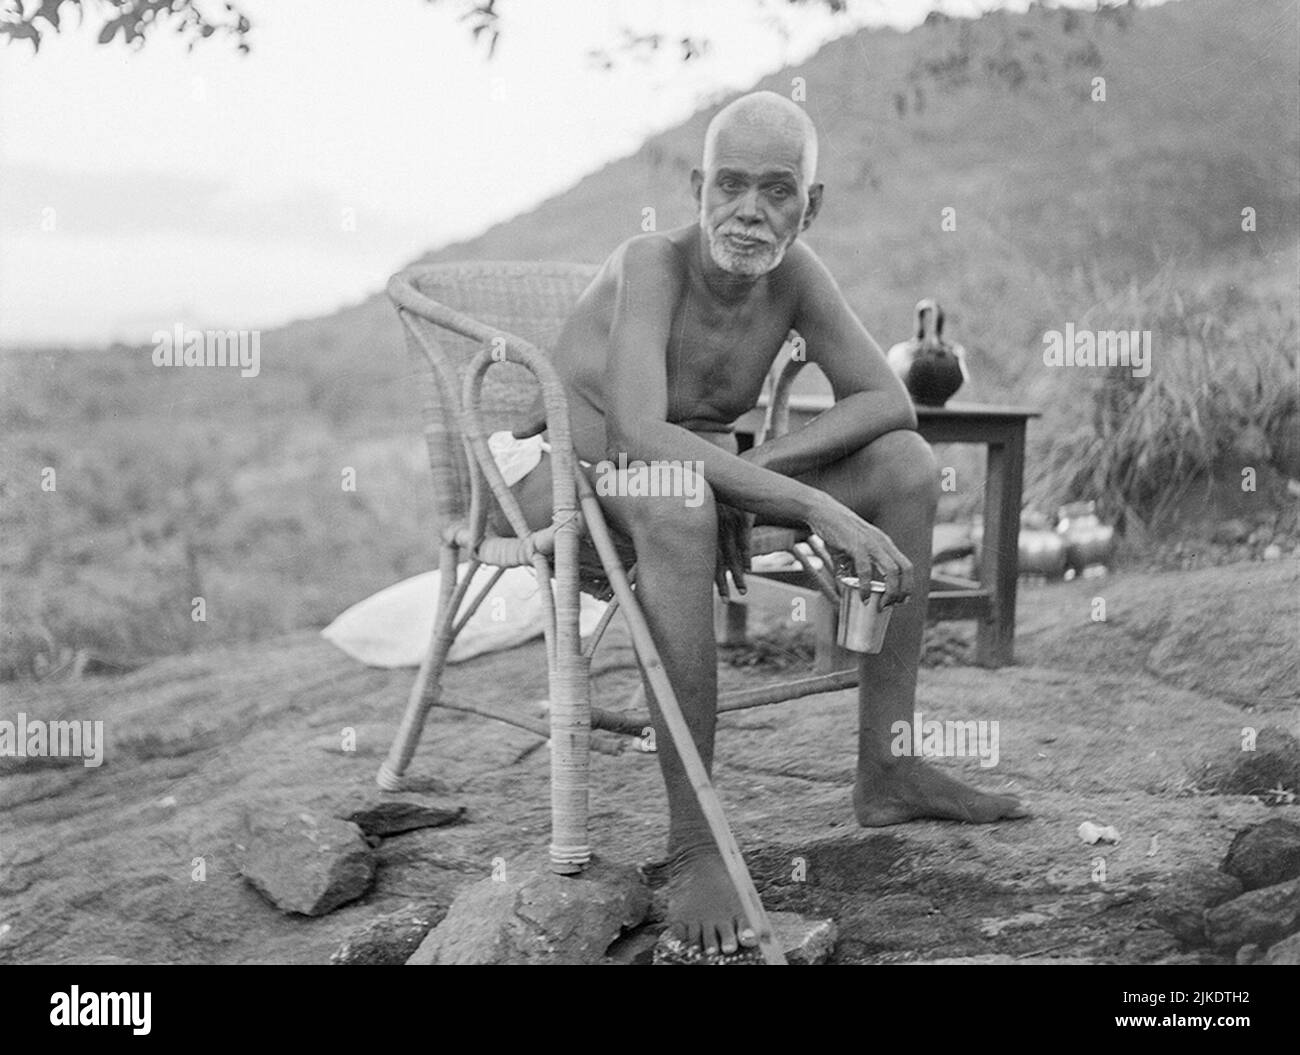 Arunachala Black and White Stock Photos & Images - Alamy